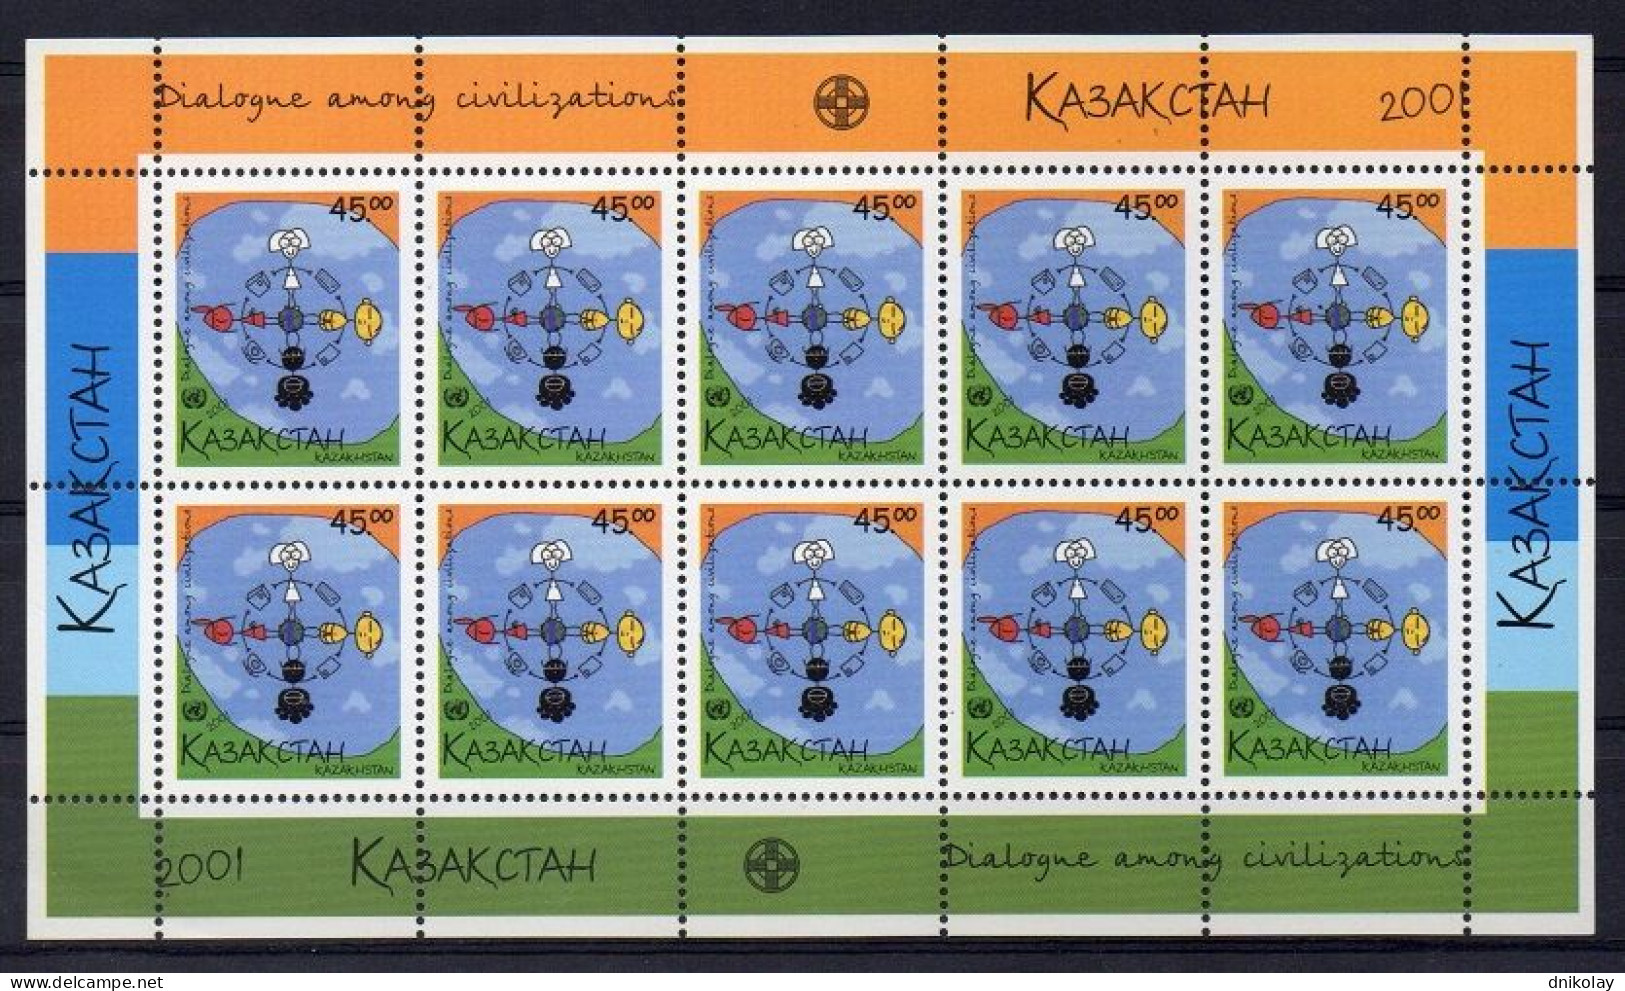 2001 348 Kazakhstan United Nations Year Of Dialogue Among Civilizations MNH - Kasachstan